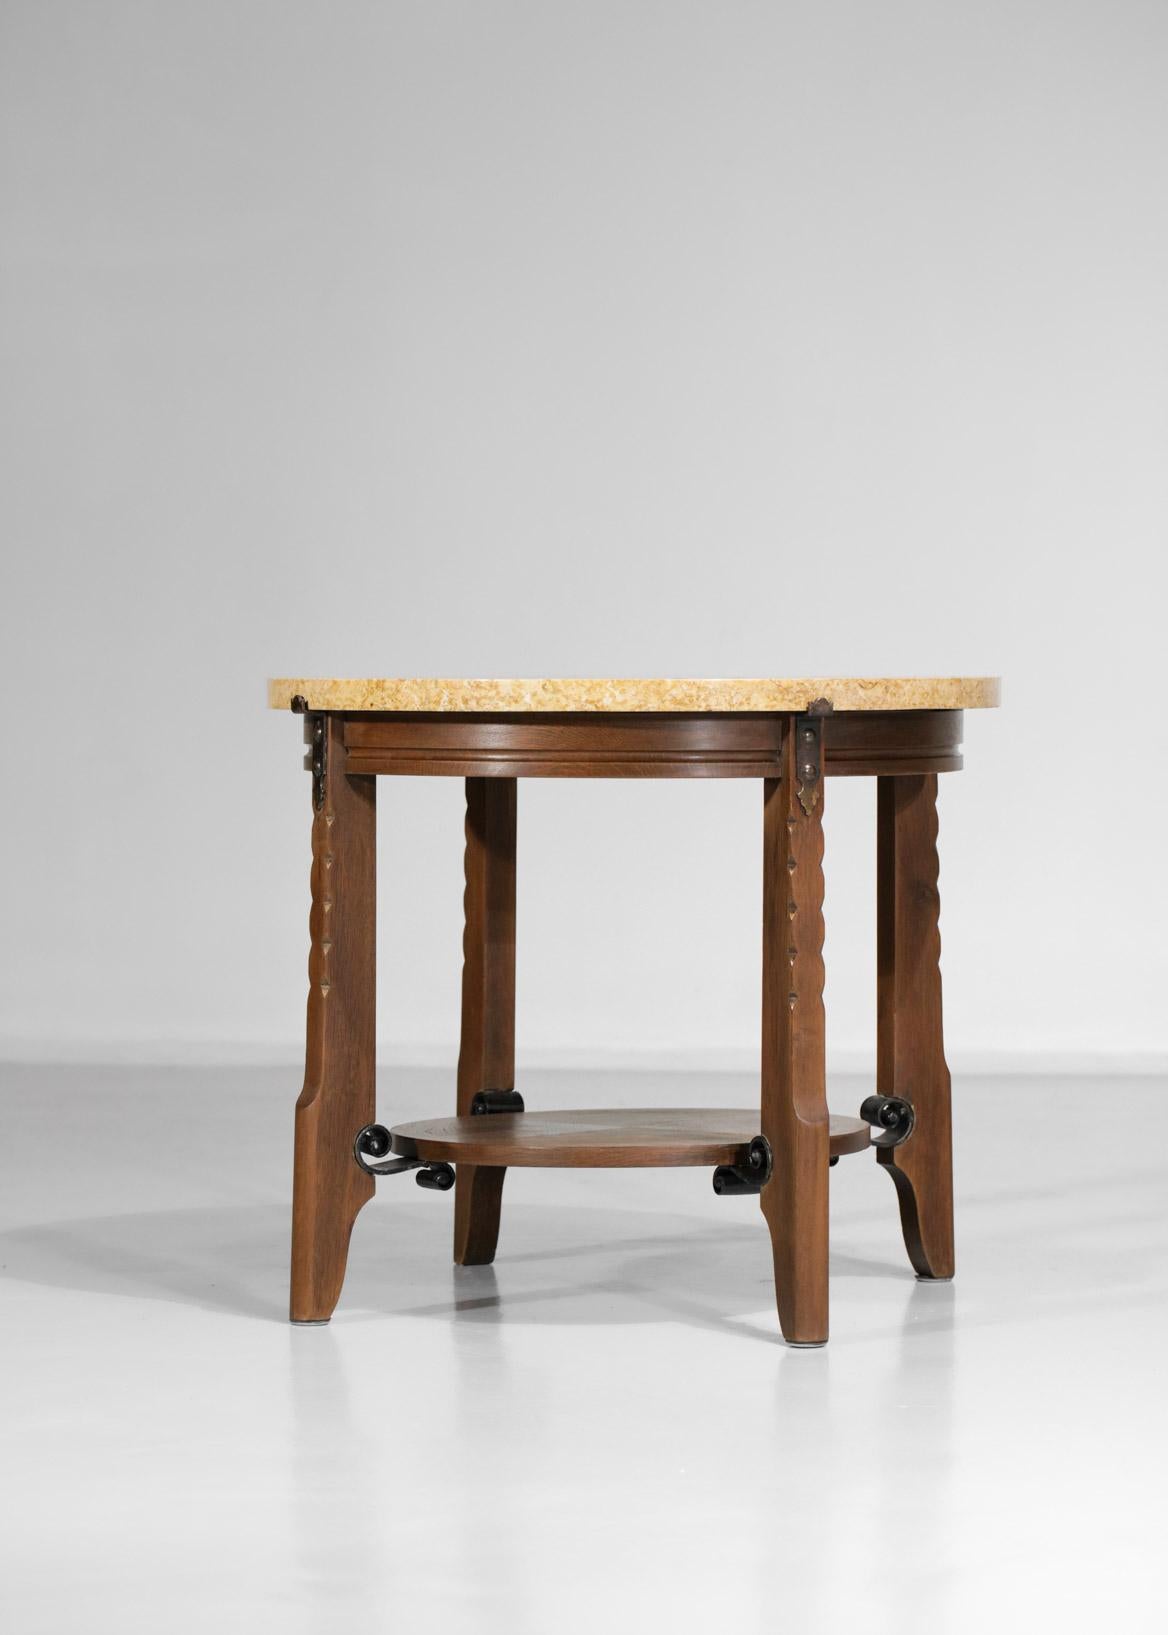 Mid-20th Century Oak and Travertine Art Deco Coffee Table 1930's Gueridon, E556 For Sale